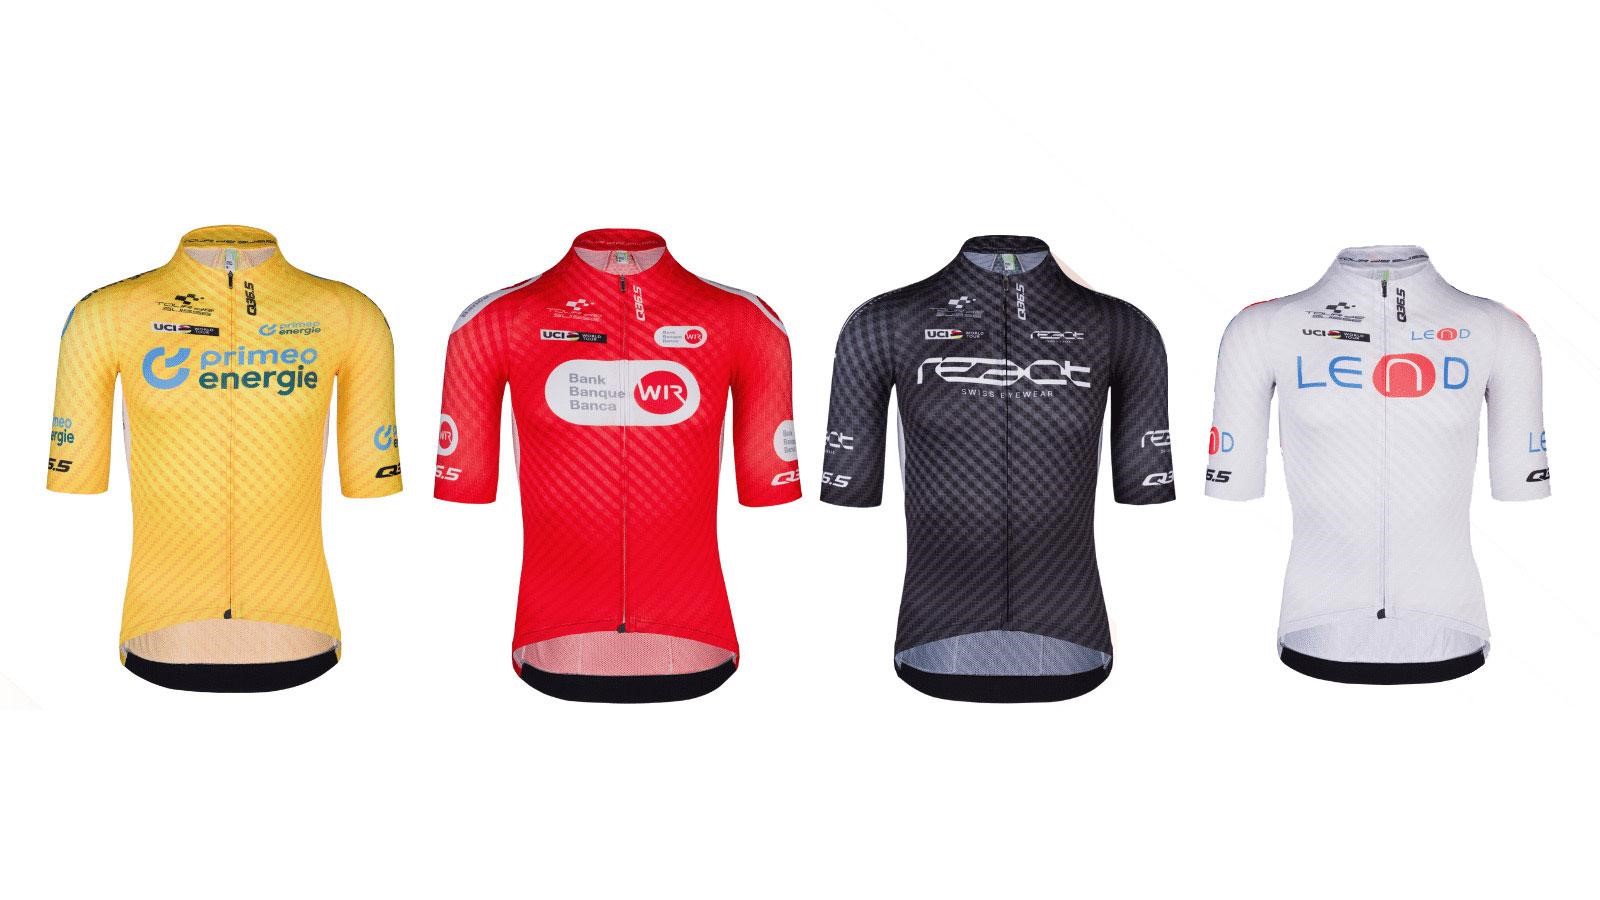 The Tour de Suisse winners jerseys